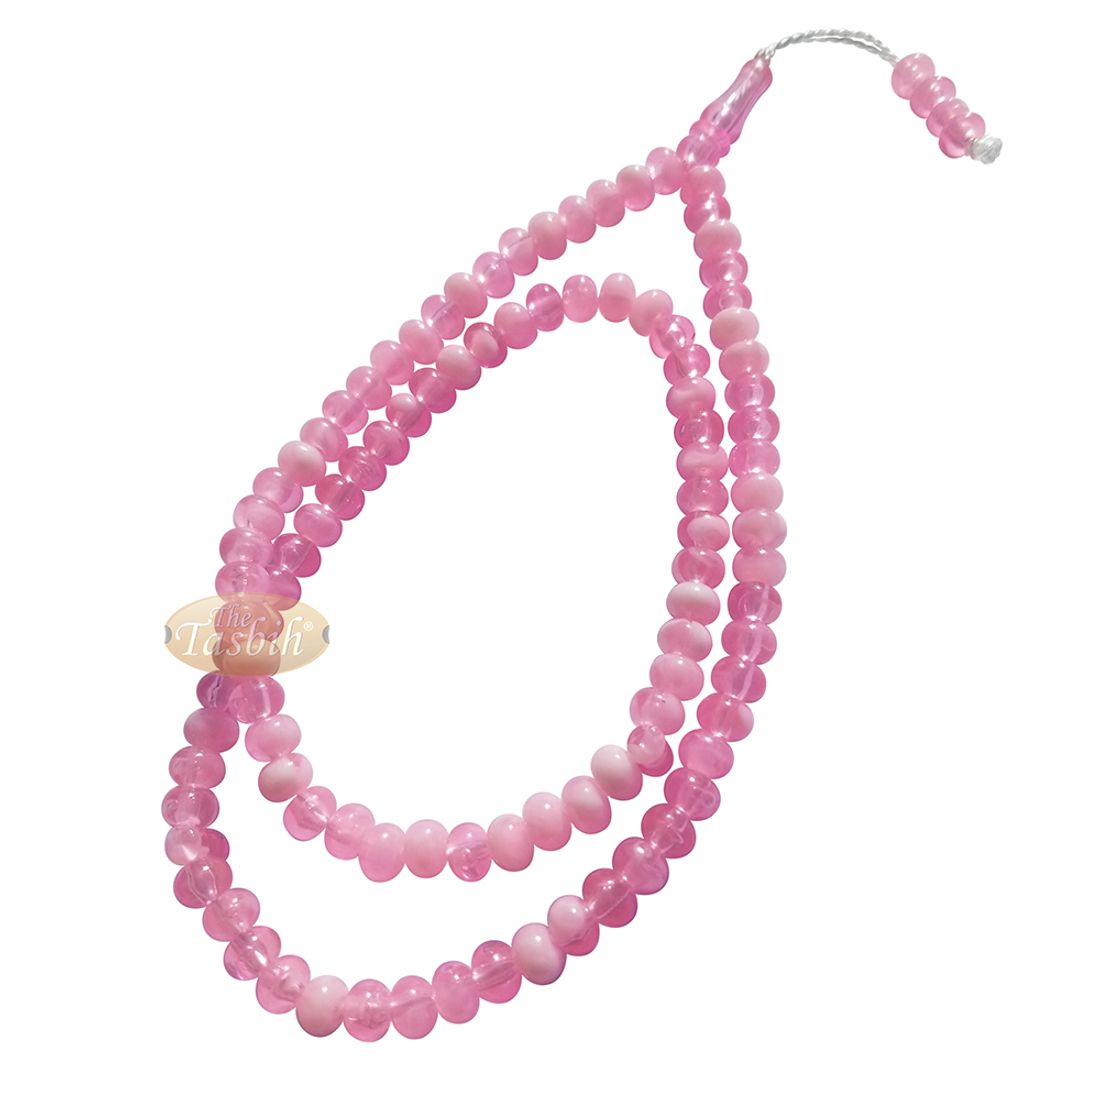 Muslim Prayer Beads – Marble Pink 7x9mm Oval Plastic Beads 99ct Dhikr Tasbih Sibha